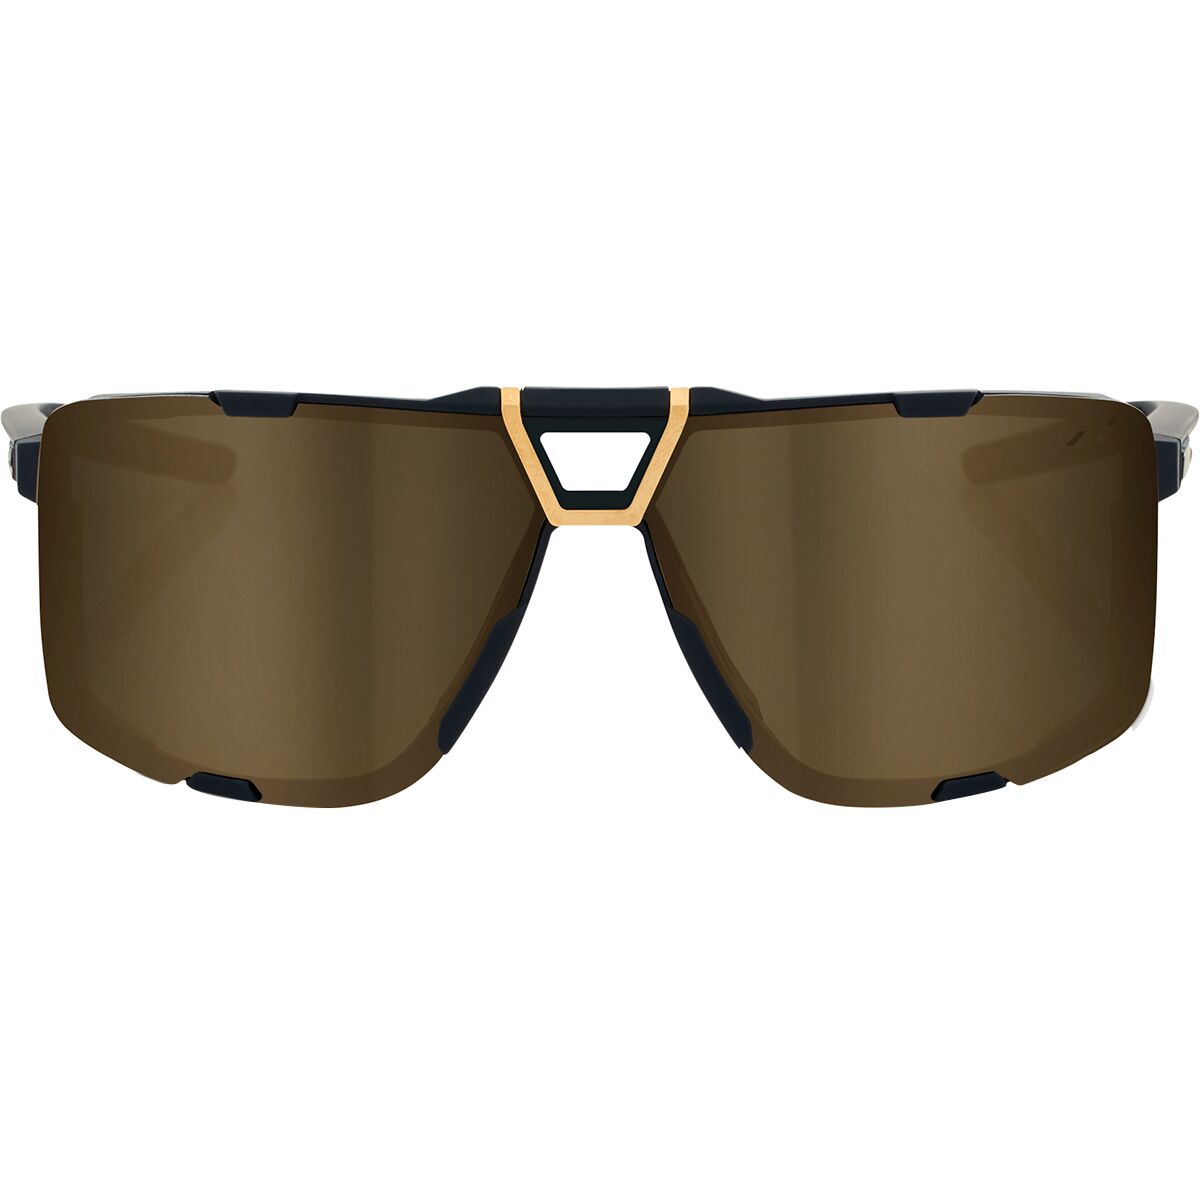  100% Eastcraft Sunglasses - Accessories